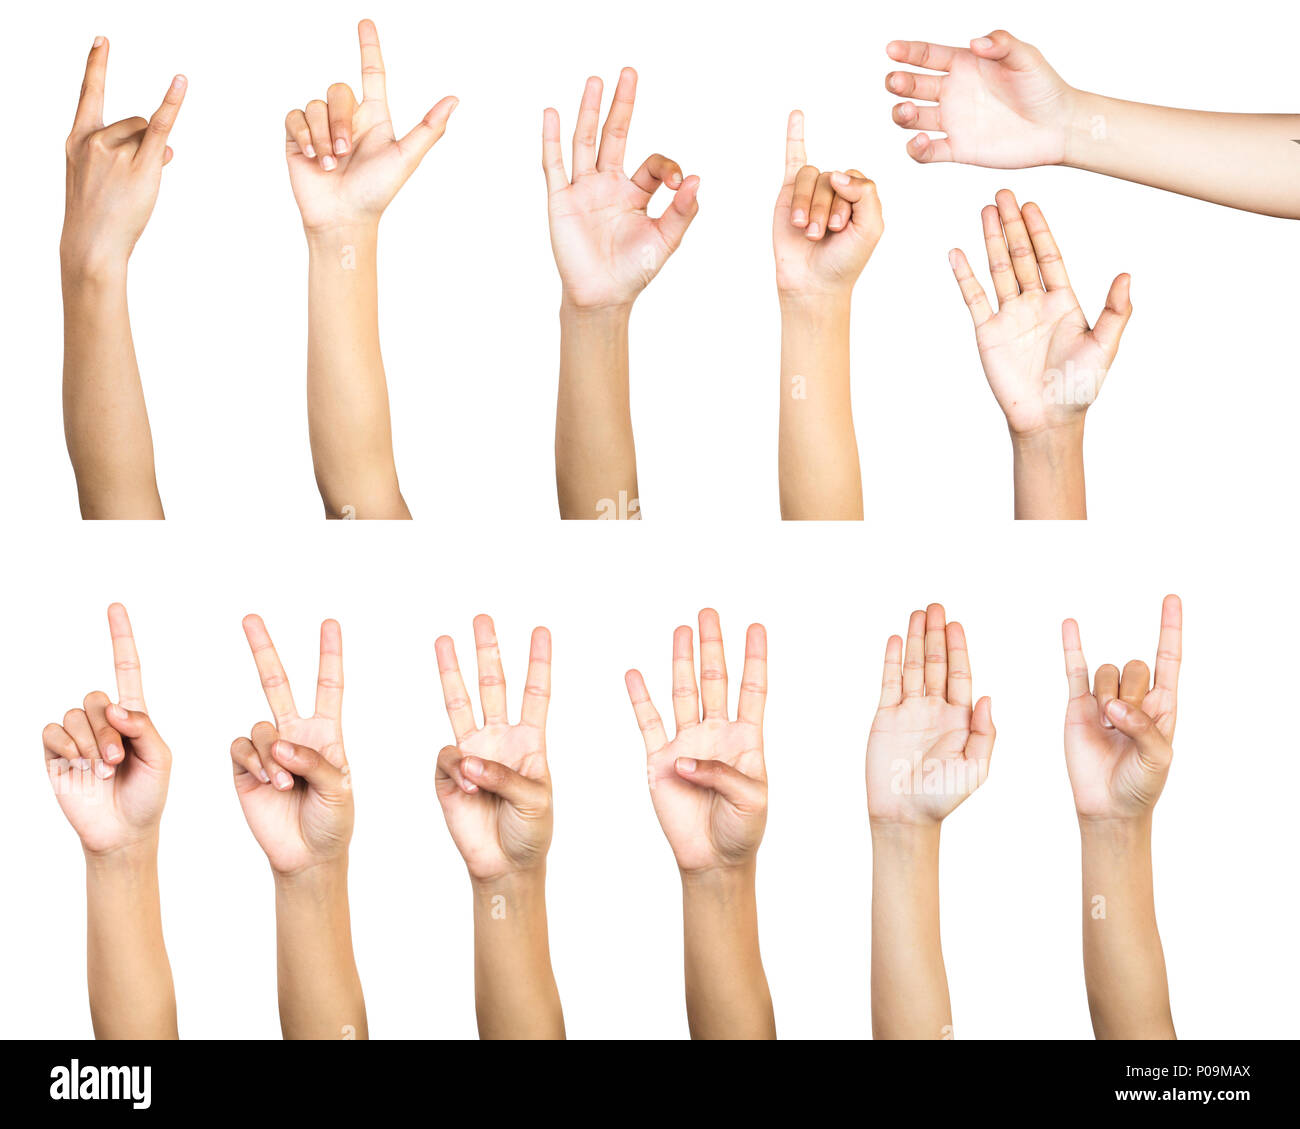 Hände gesten bedeutung Glossar Körpersprache